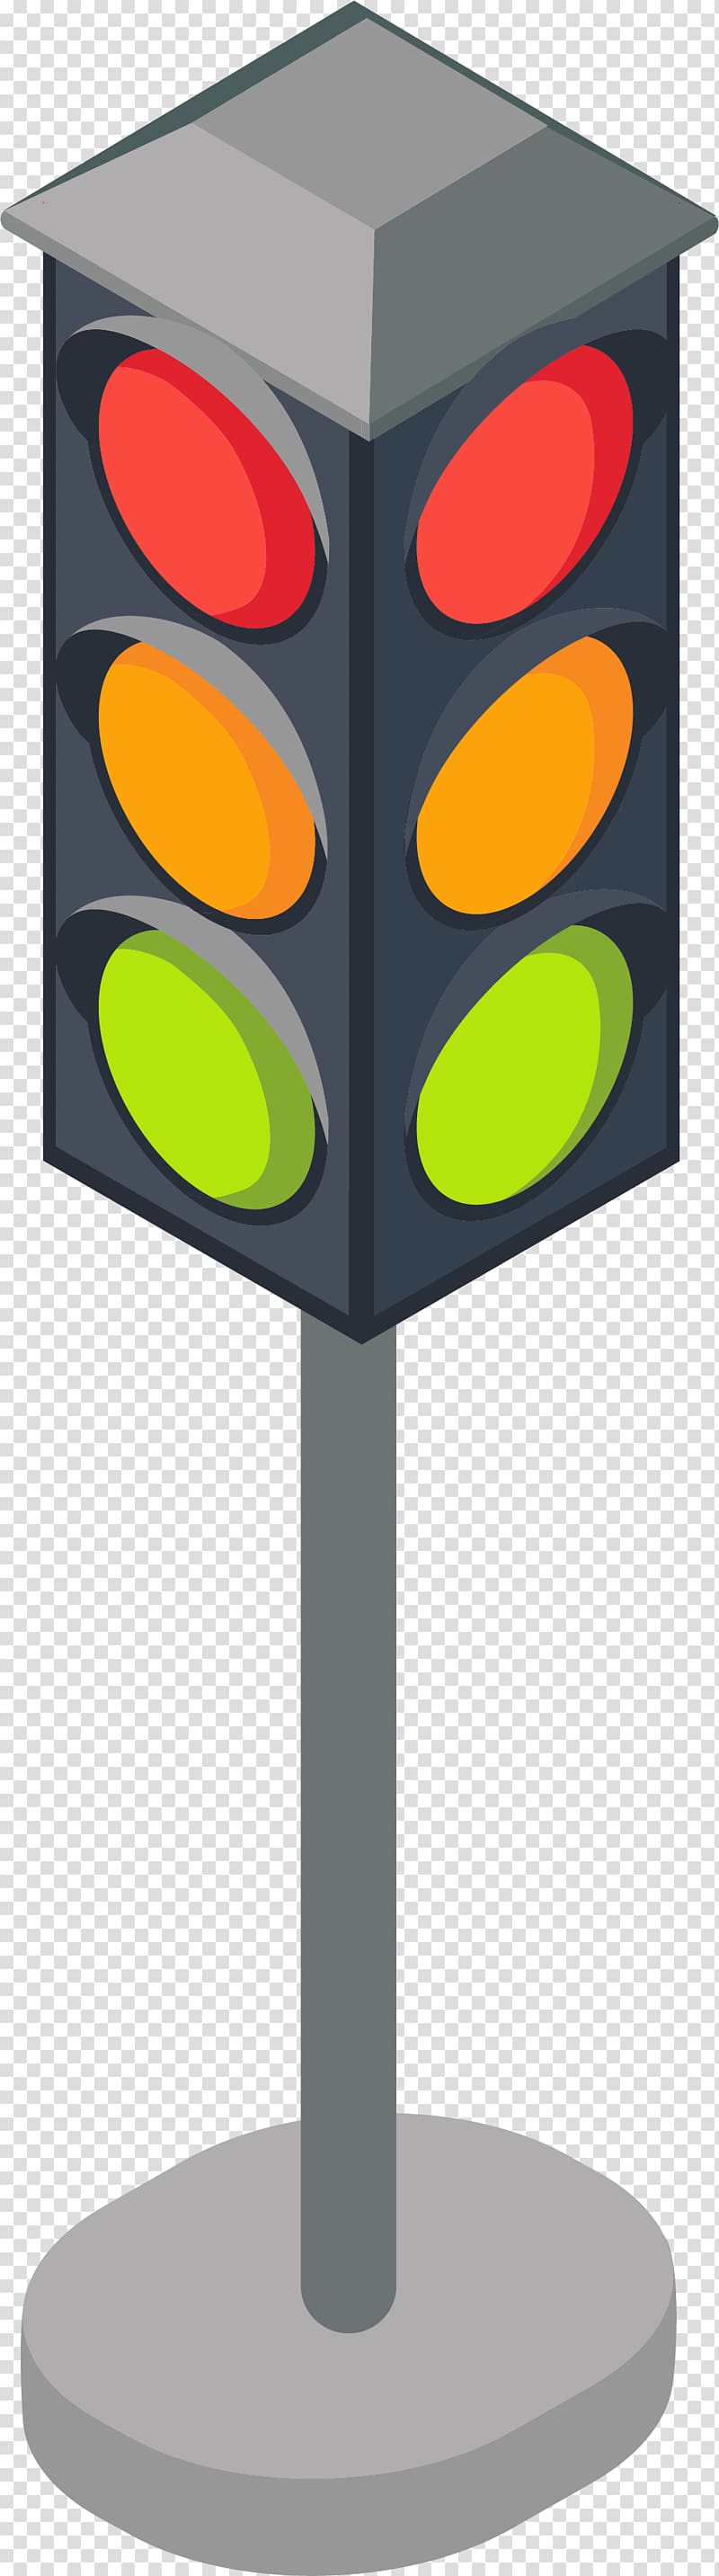 Traffic Light Street Light Road Street Light Transparent Background Png Clipart Hiclipart